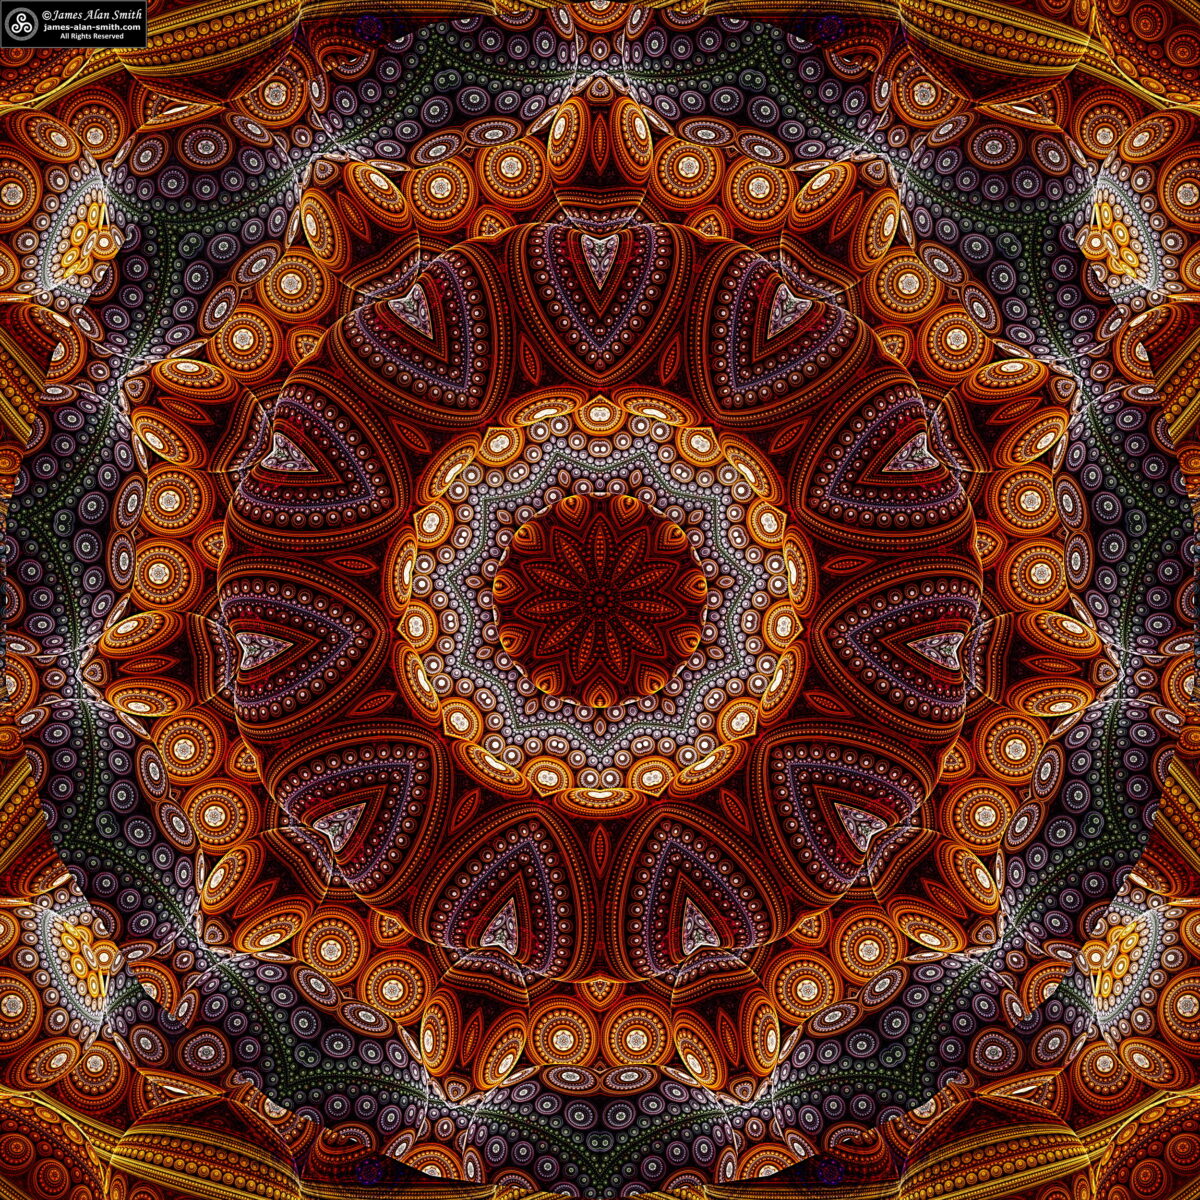 Celestial Orbs Mandala: Artwork by James Alan Smith